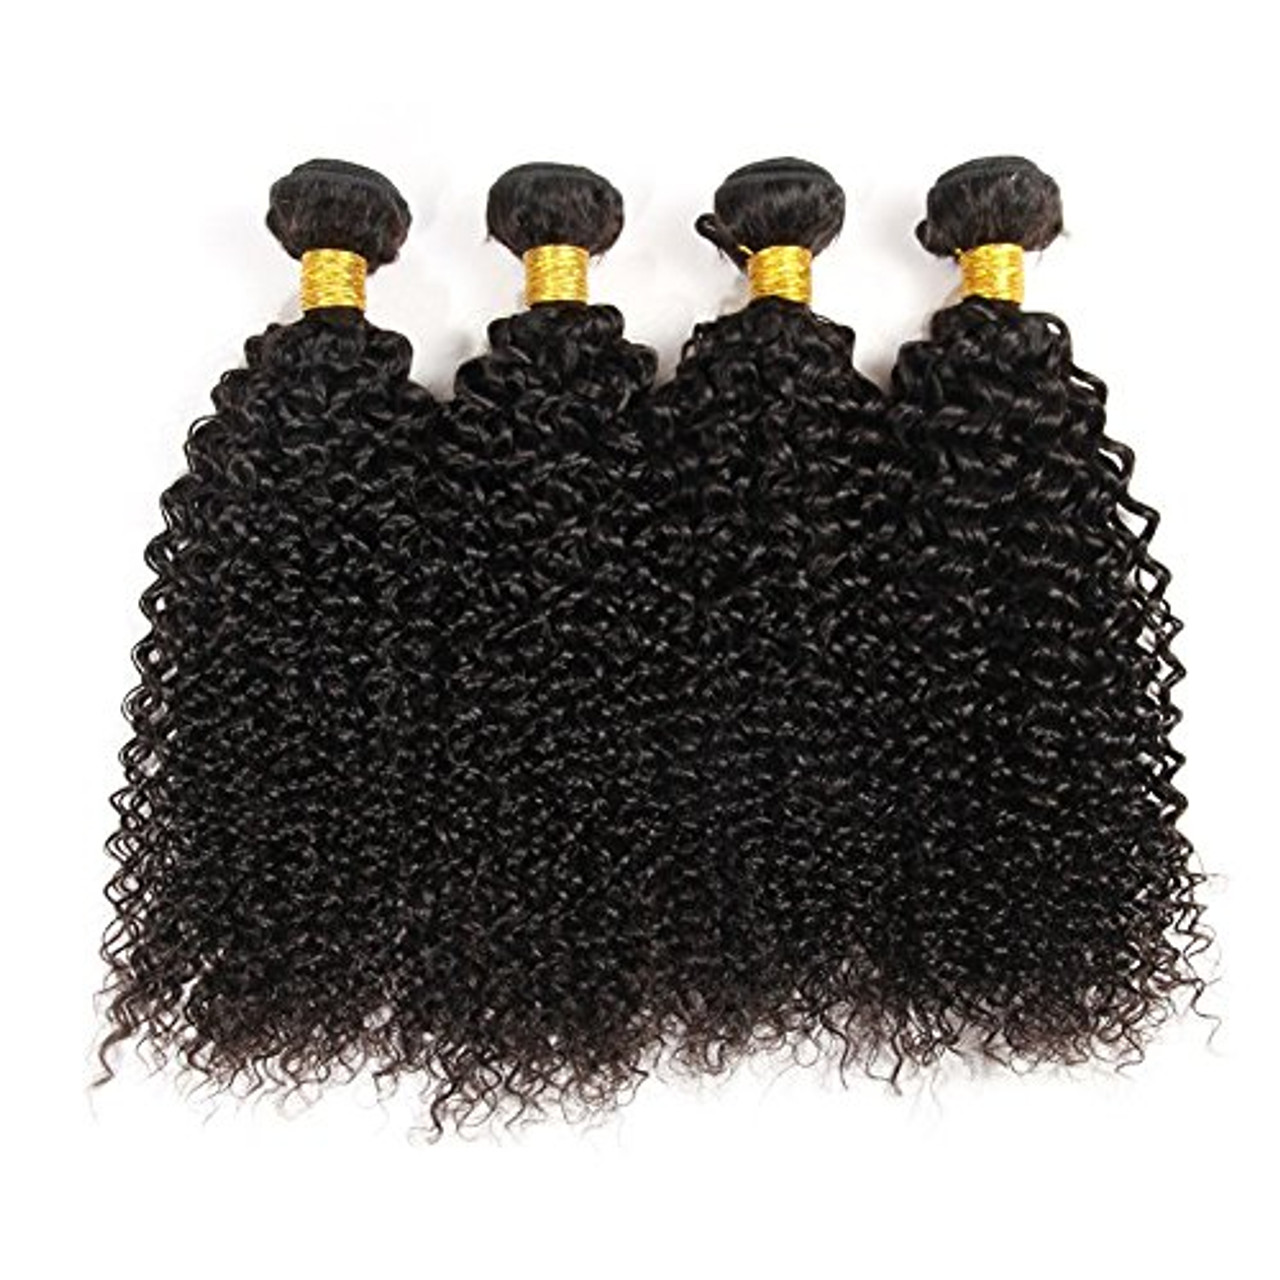 Silicone elastic thread 65 yards – Hair Brazil 4 Extension